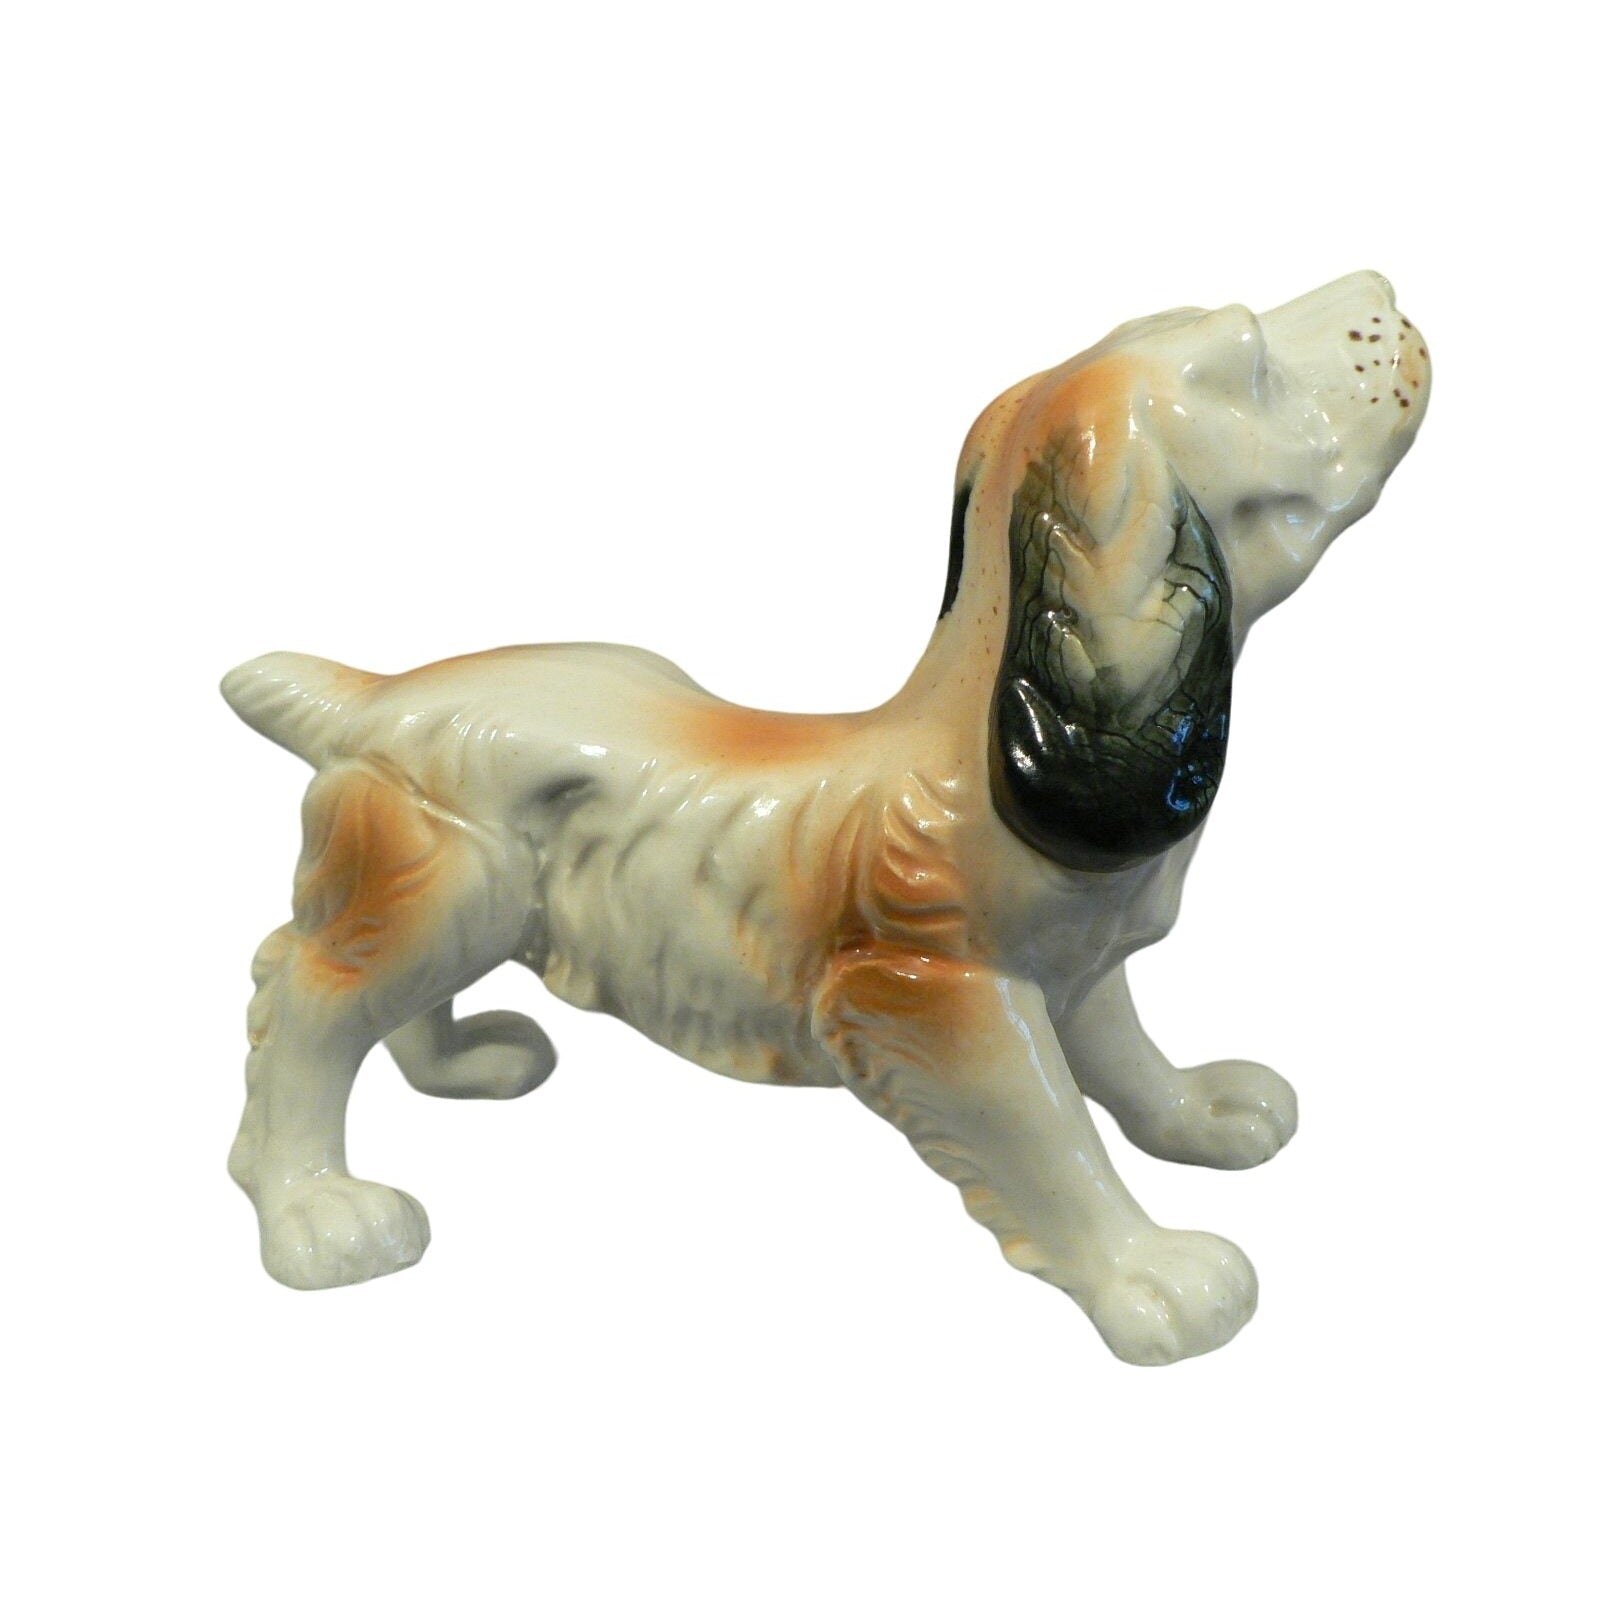 Dog Figurine Hand Painted Bone China Hallmark Stamped White Brown Vintage 4" H